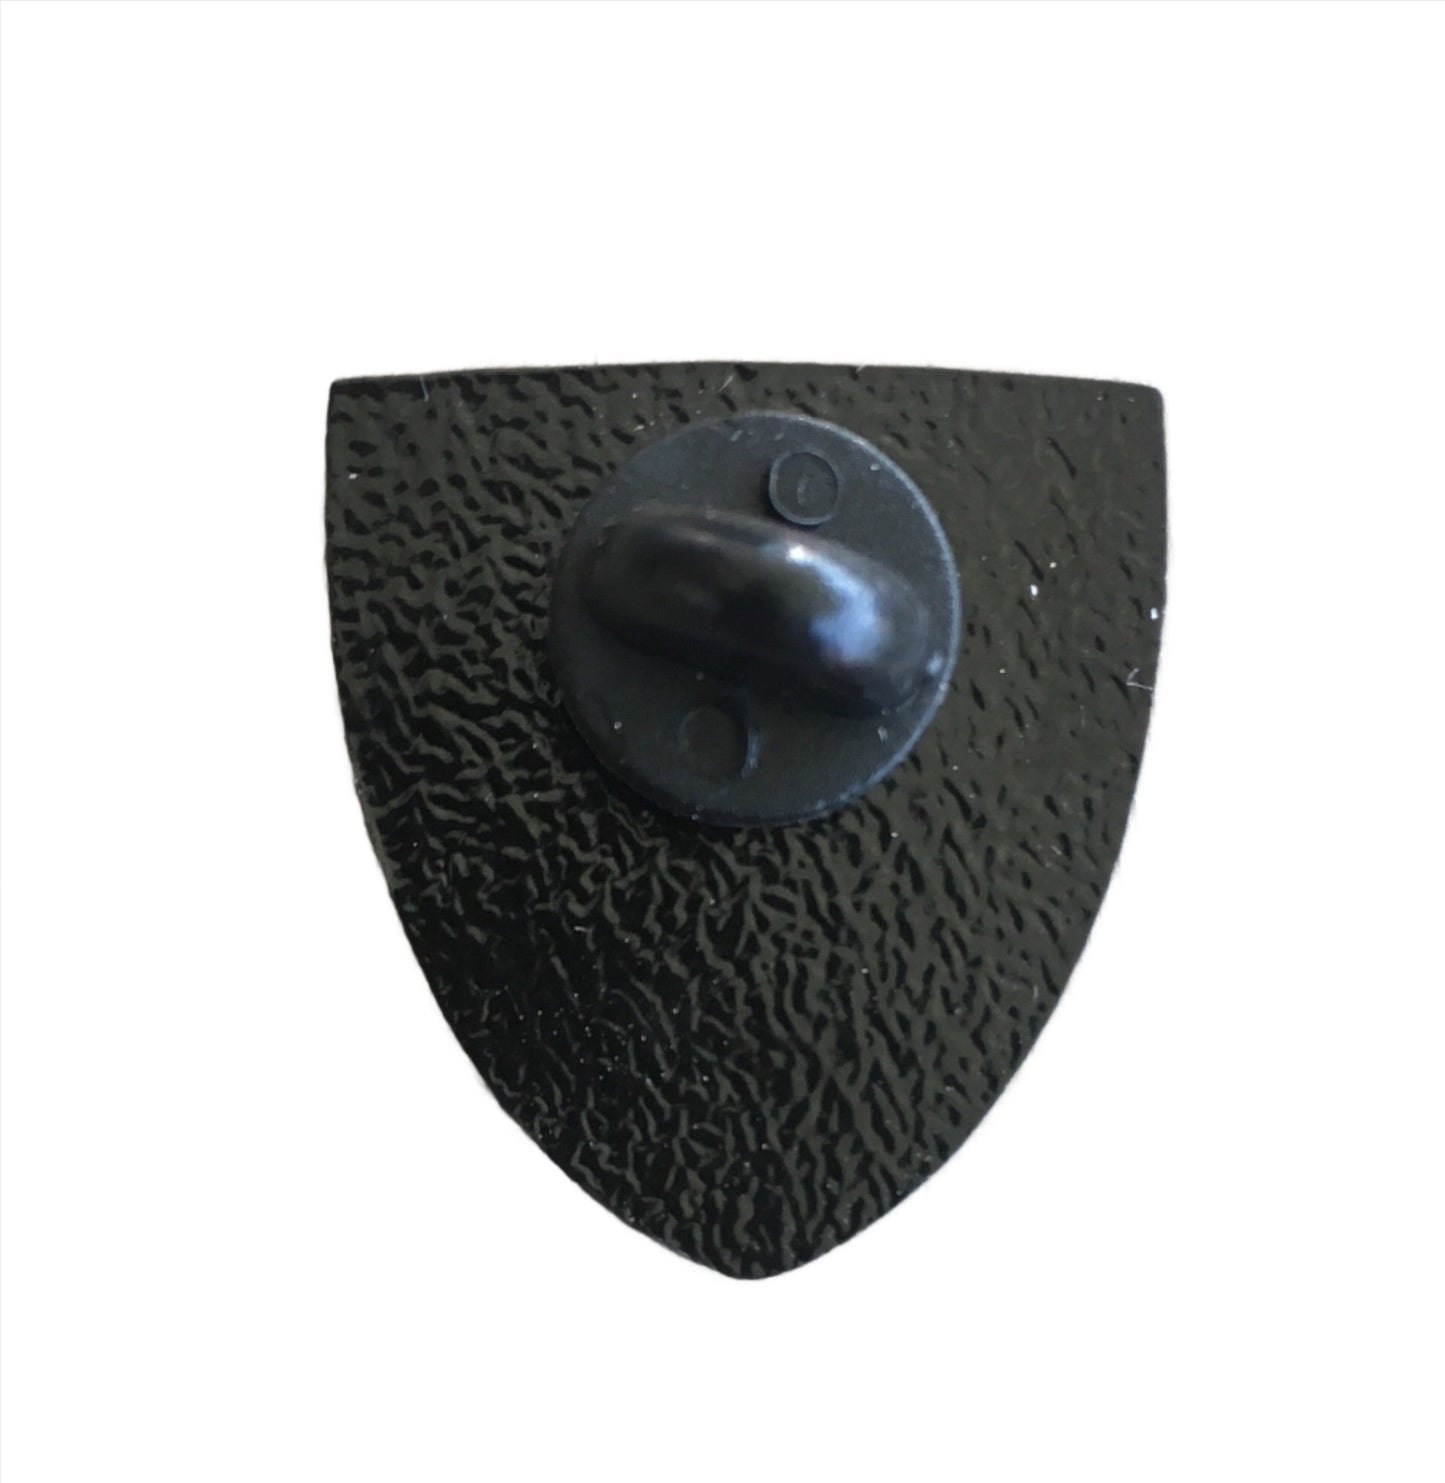 Rhino Protection Pin - Enamel